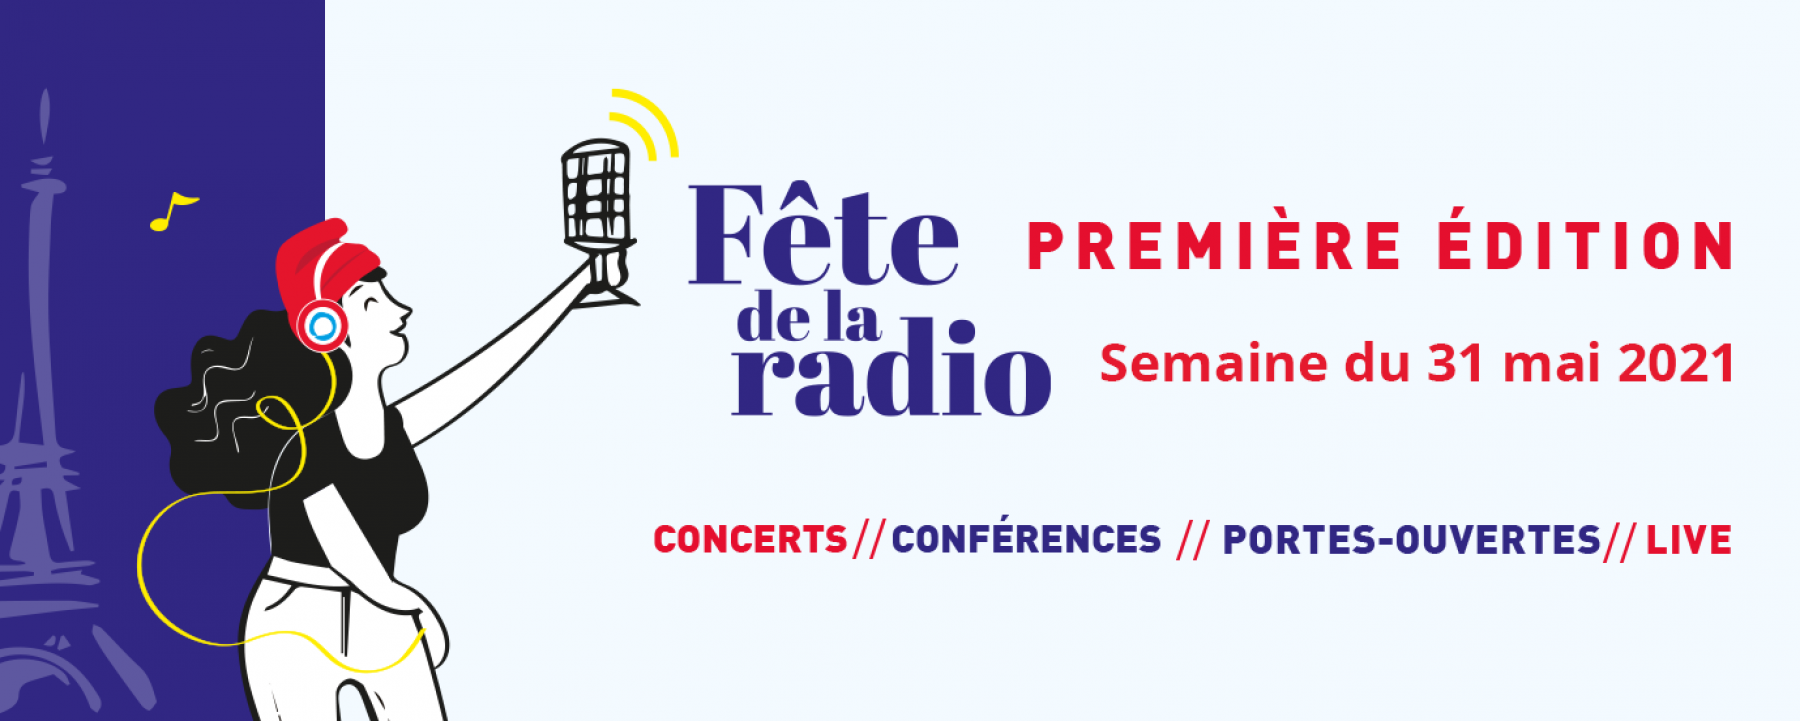 Fête de la radio 2021, organisé par Radio France